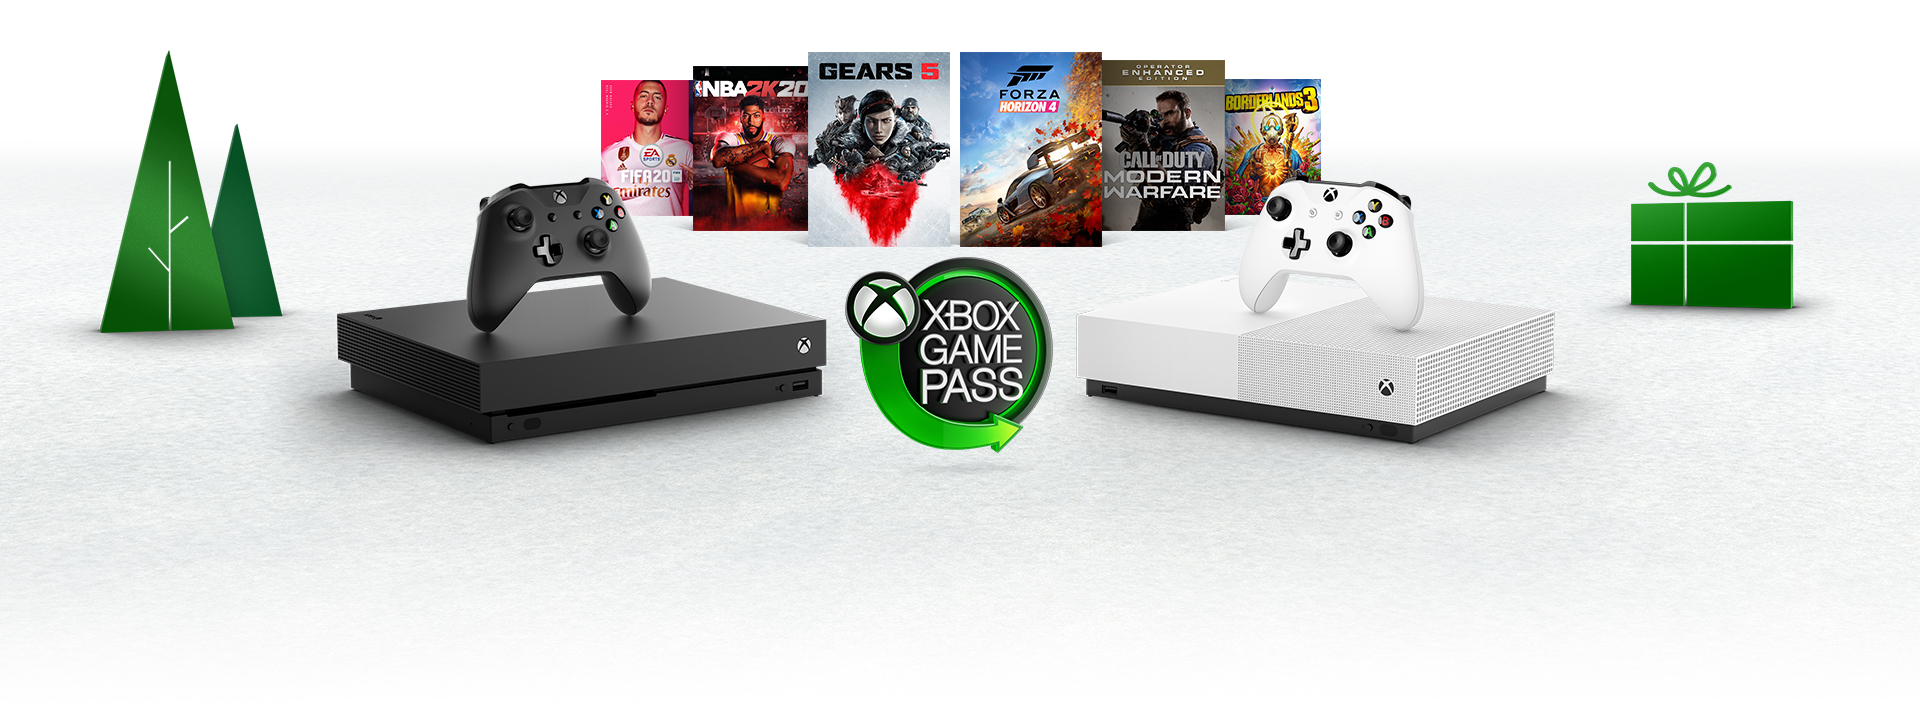 Deals | This Week's Xbox Deals - 